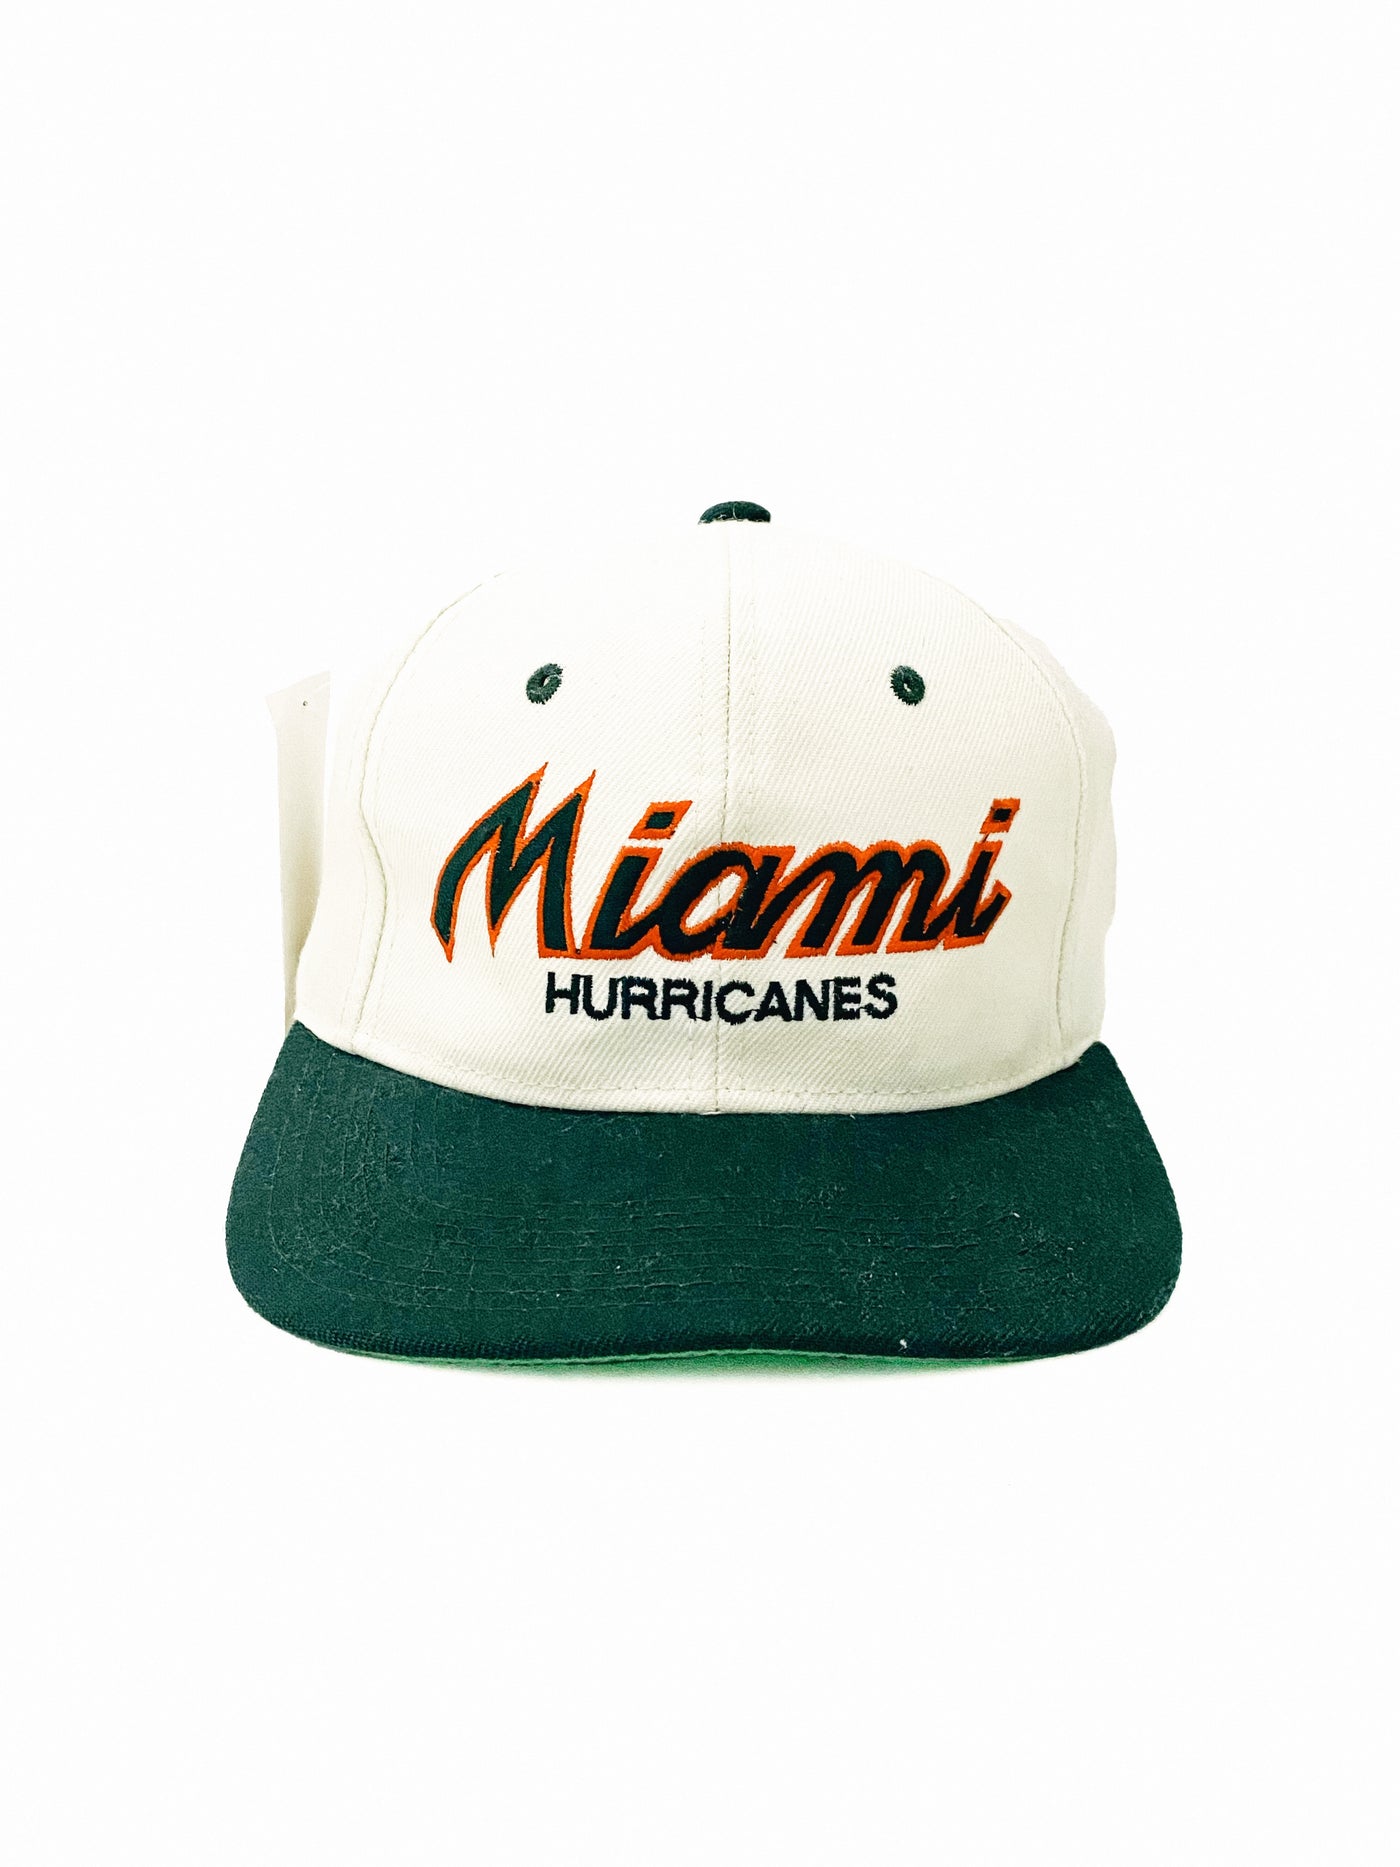 Vintage Miami Hurricanes Wool Sports Specialties Snapback